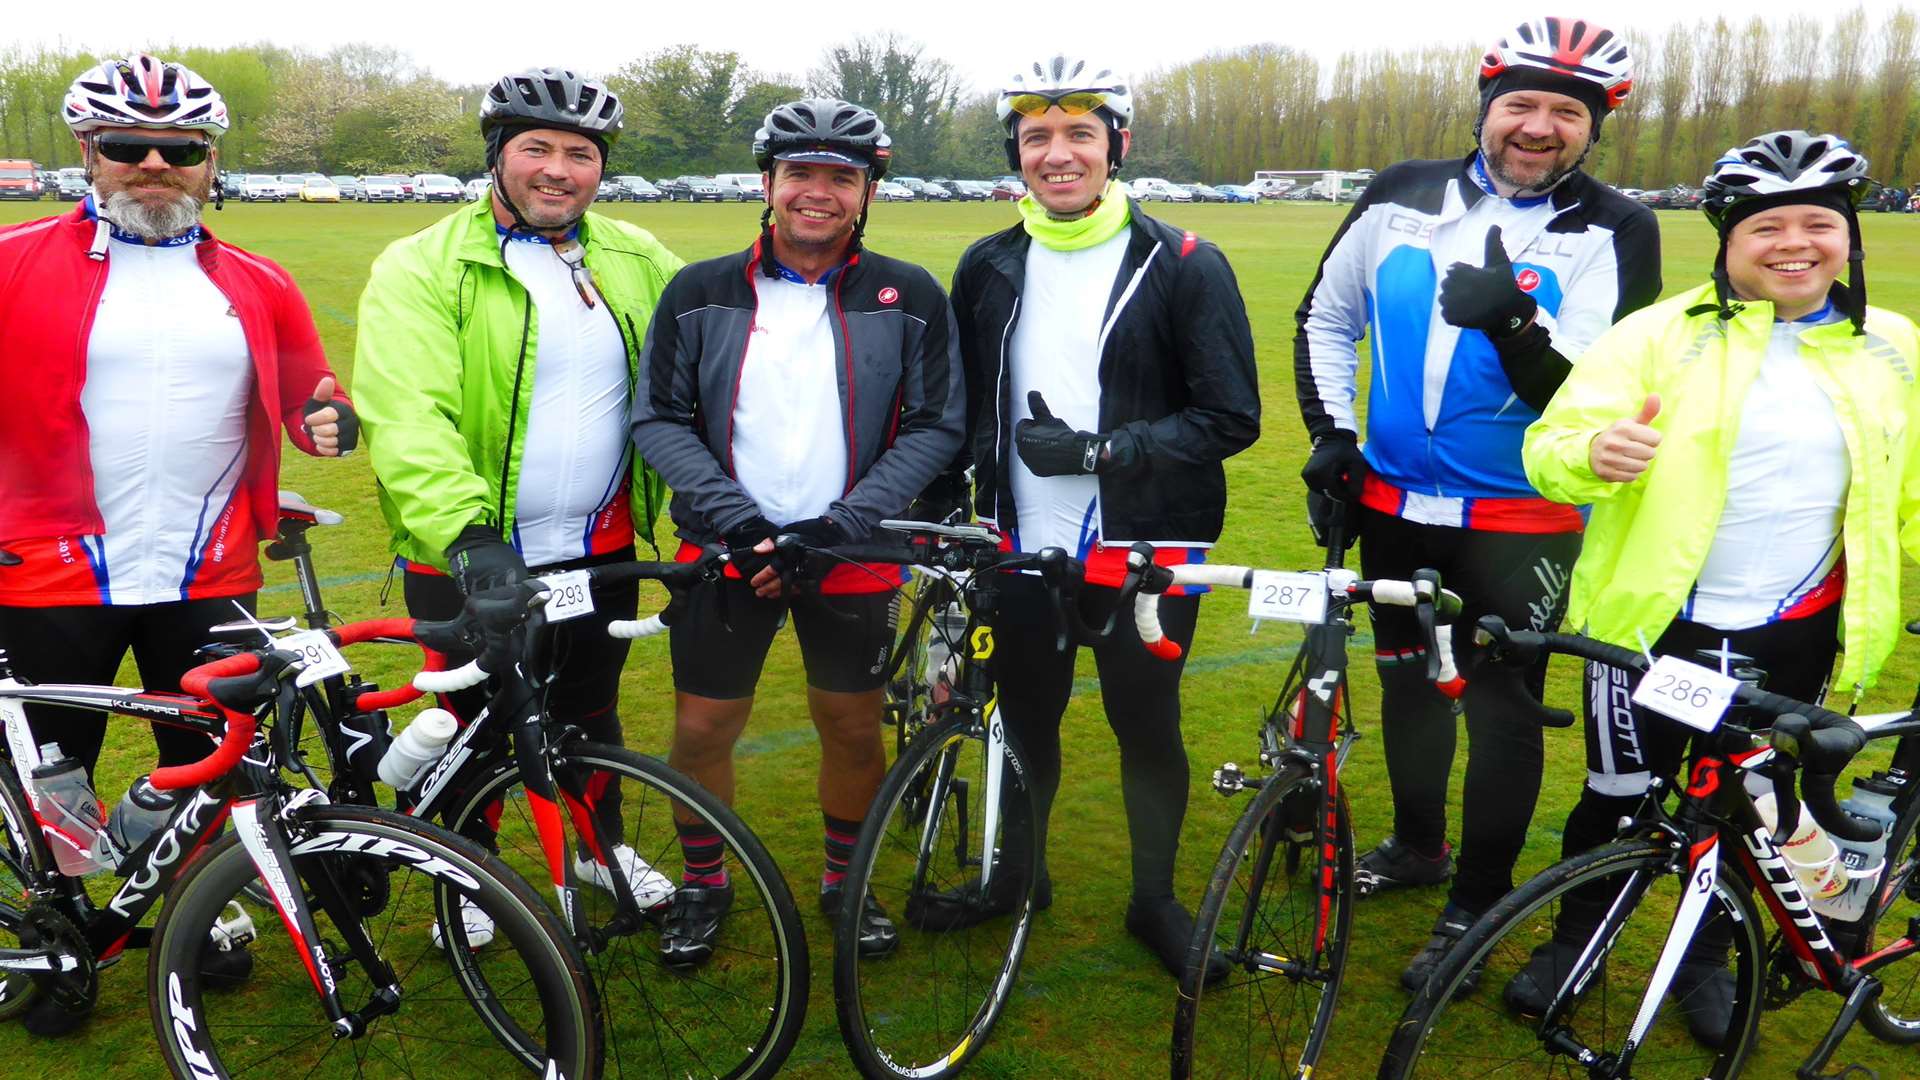 Thanet cyclists Bob, Mick, Barry, Jon, Andy and Simon all on 100K ride at the KM Big Bike Ride 2015 on Sunday April 26.